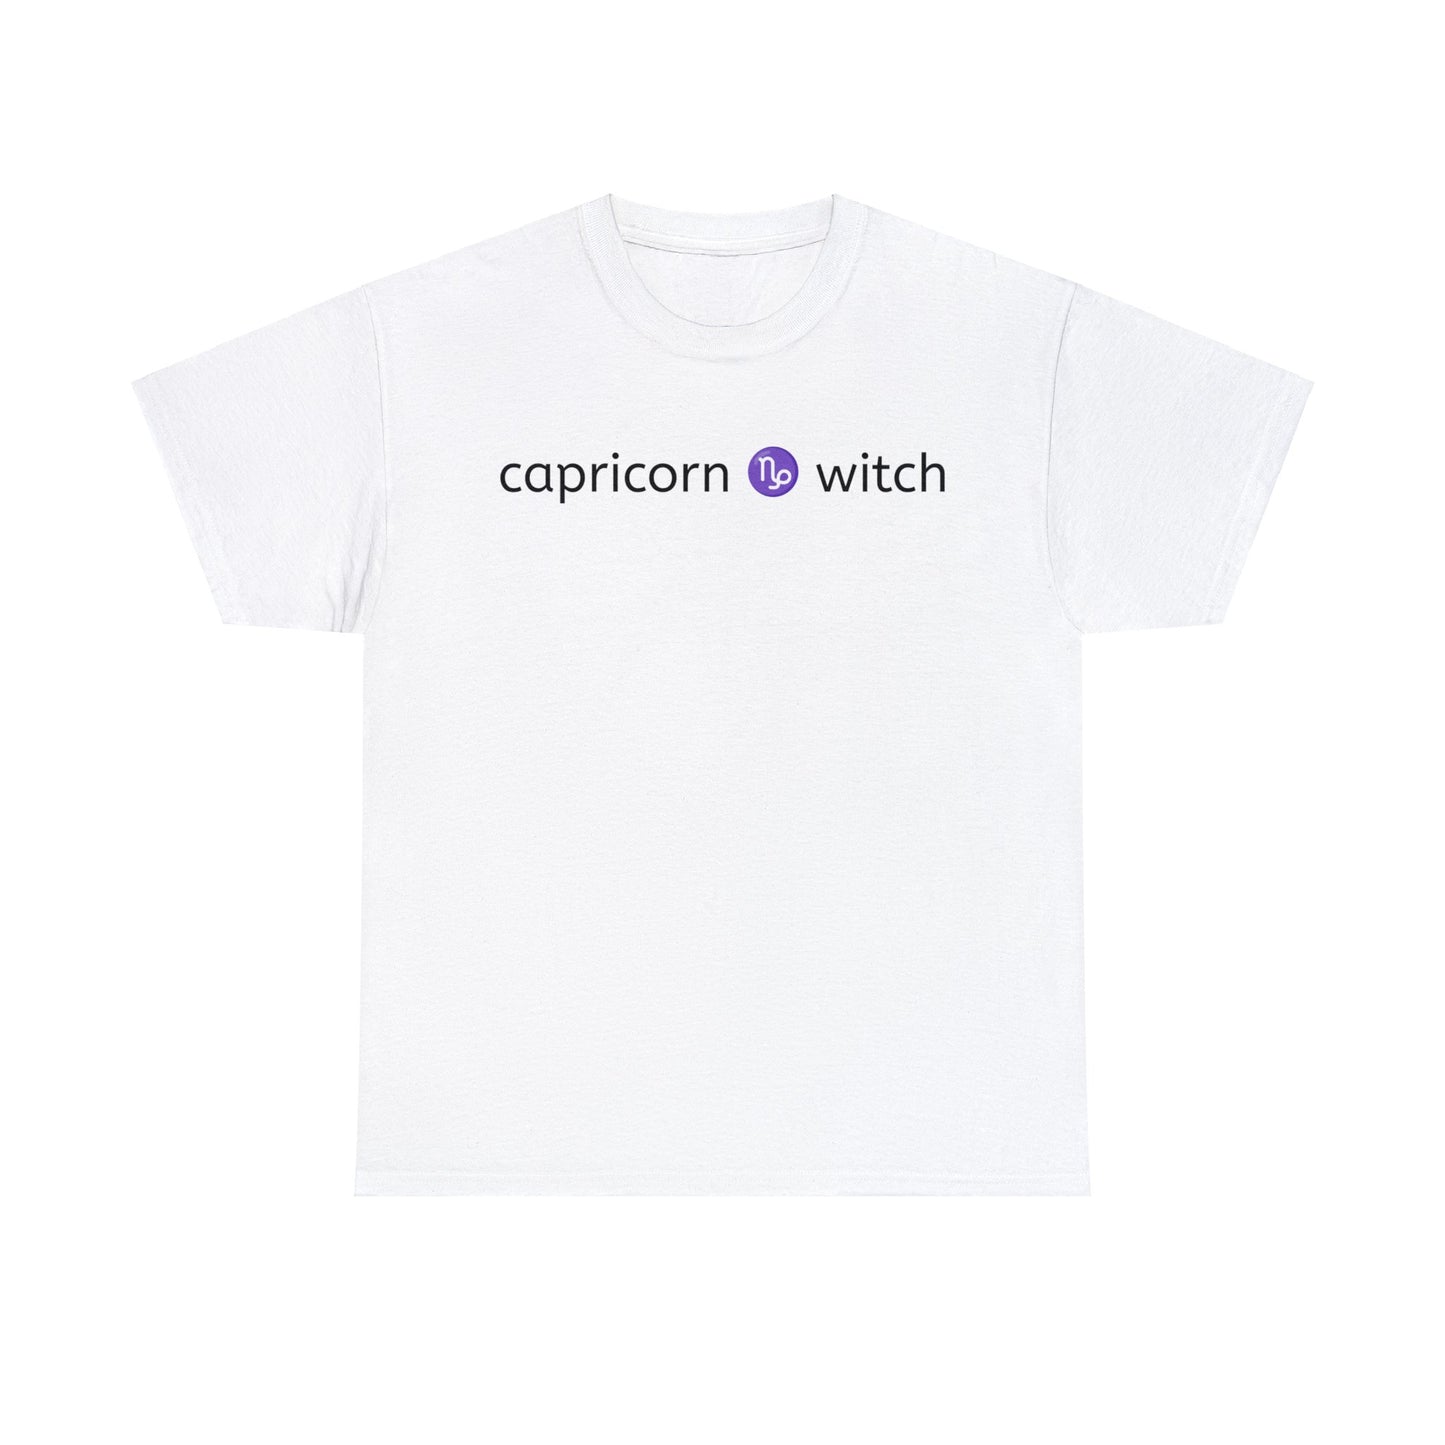 Capricorn Witch Unisex Cotton Tee